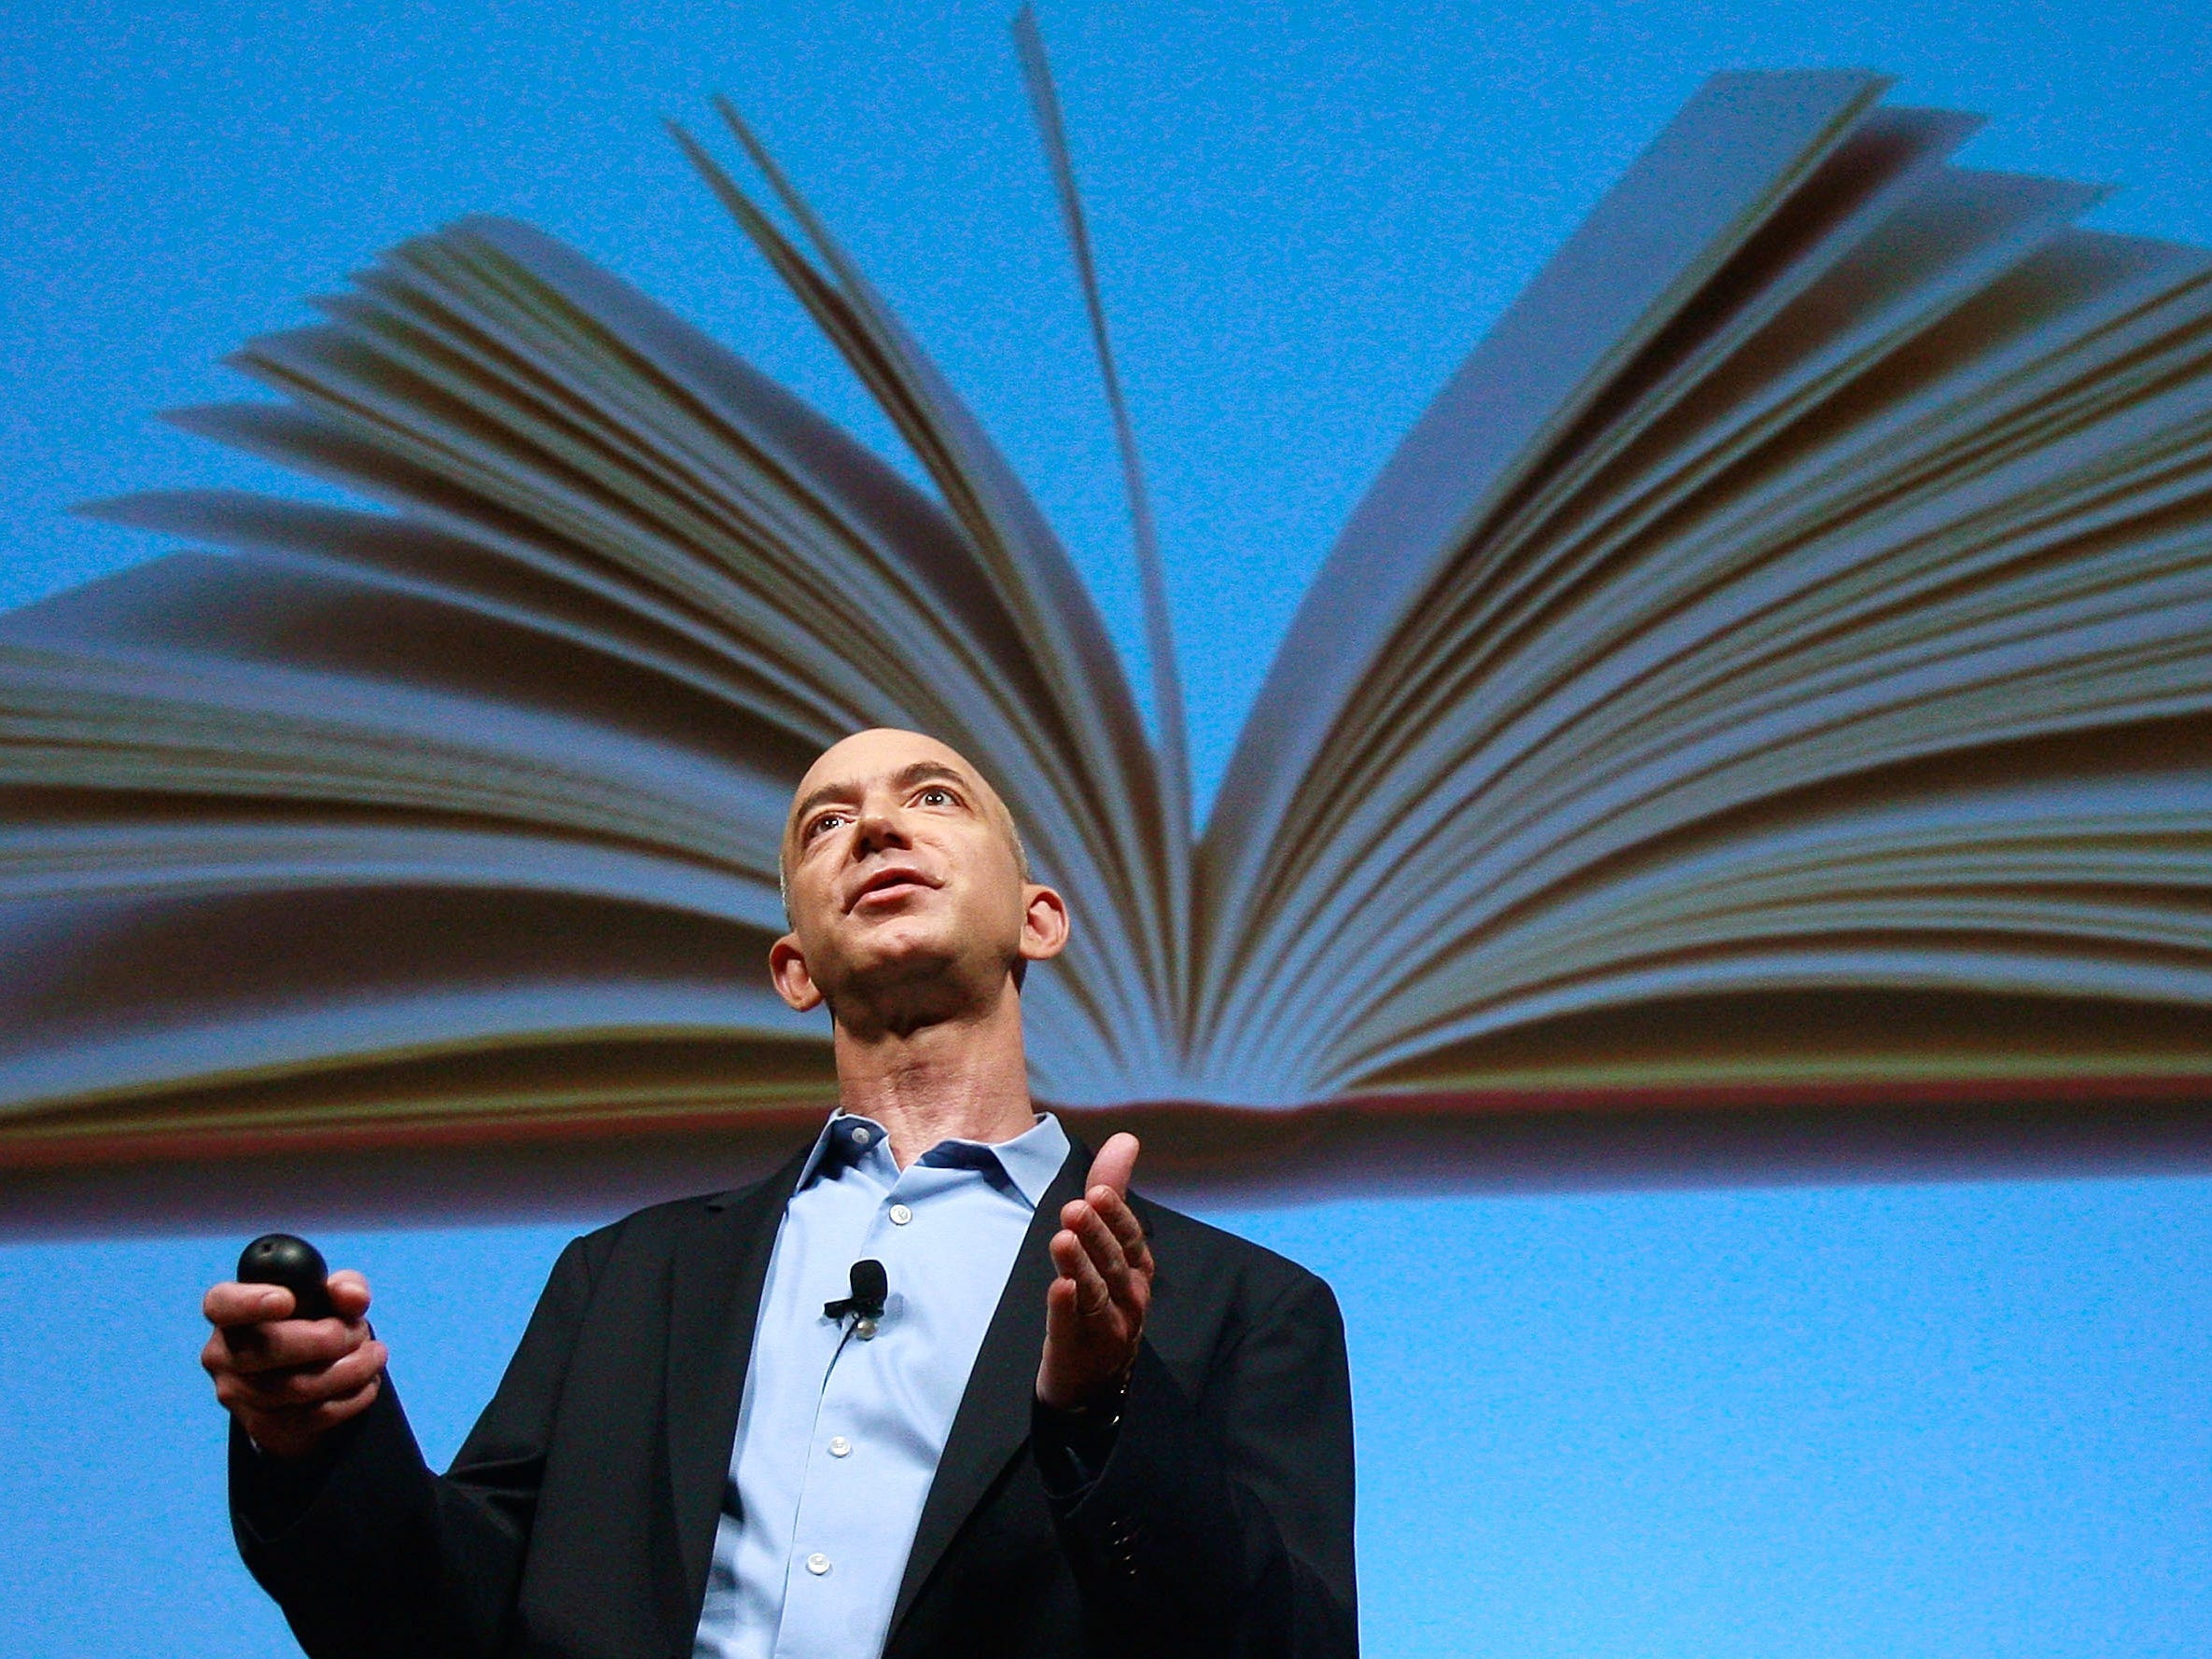 Amazon founder Jeff Bezos unveiling the Amazon Kindle 2.0 in 2009. Mario Tama/Getty Images